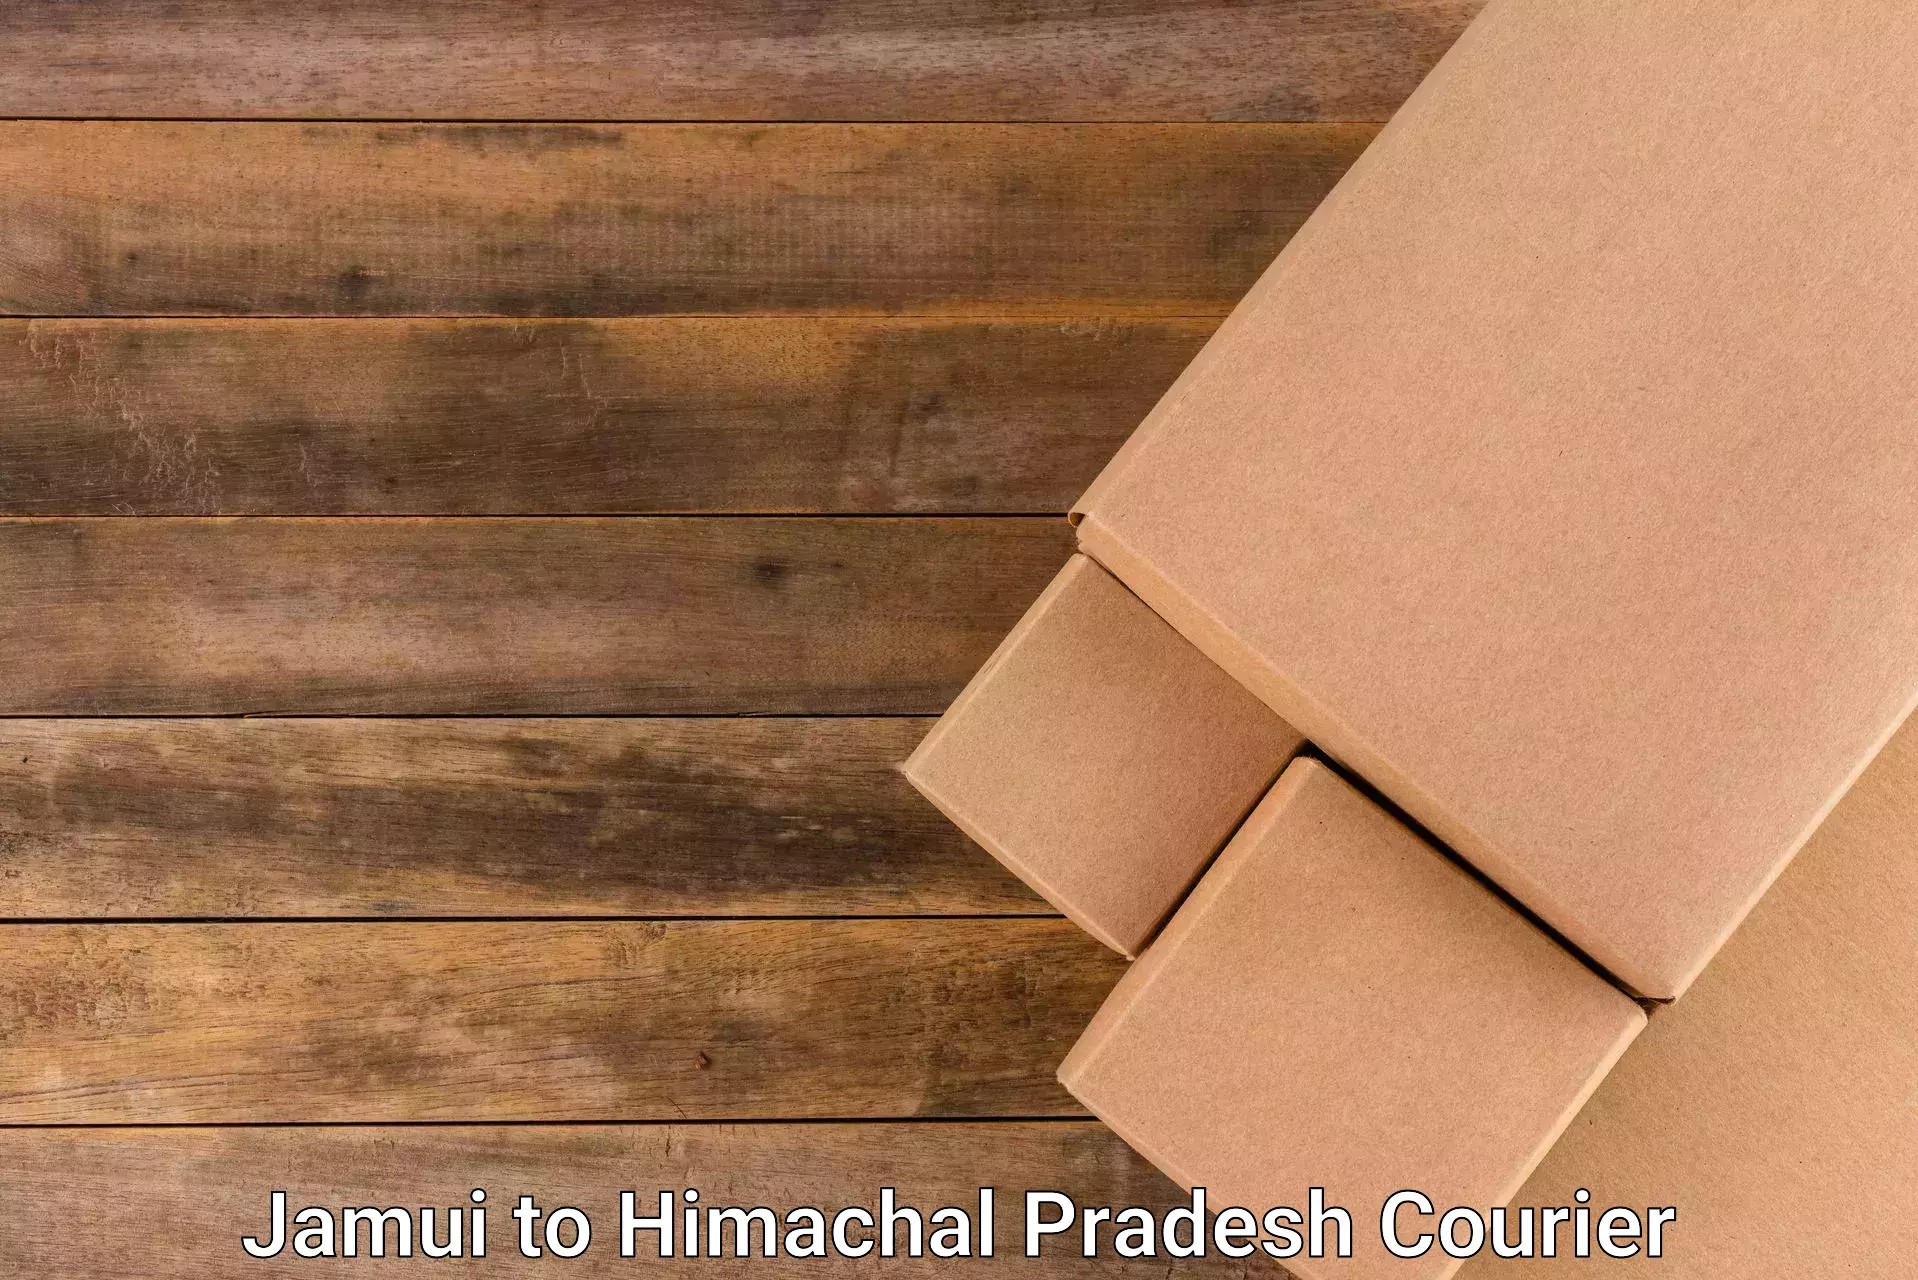 24-hour delivery options Jamui to Himachal Pradesh